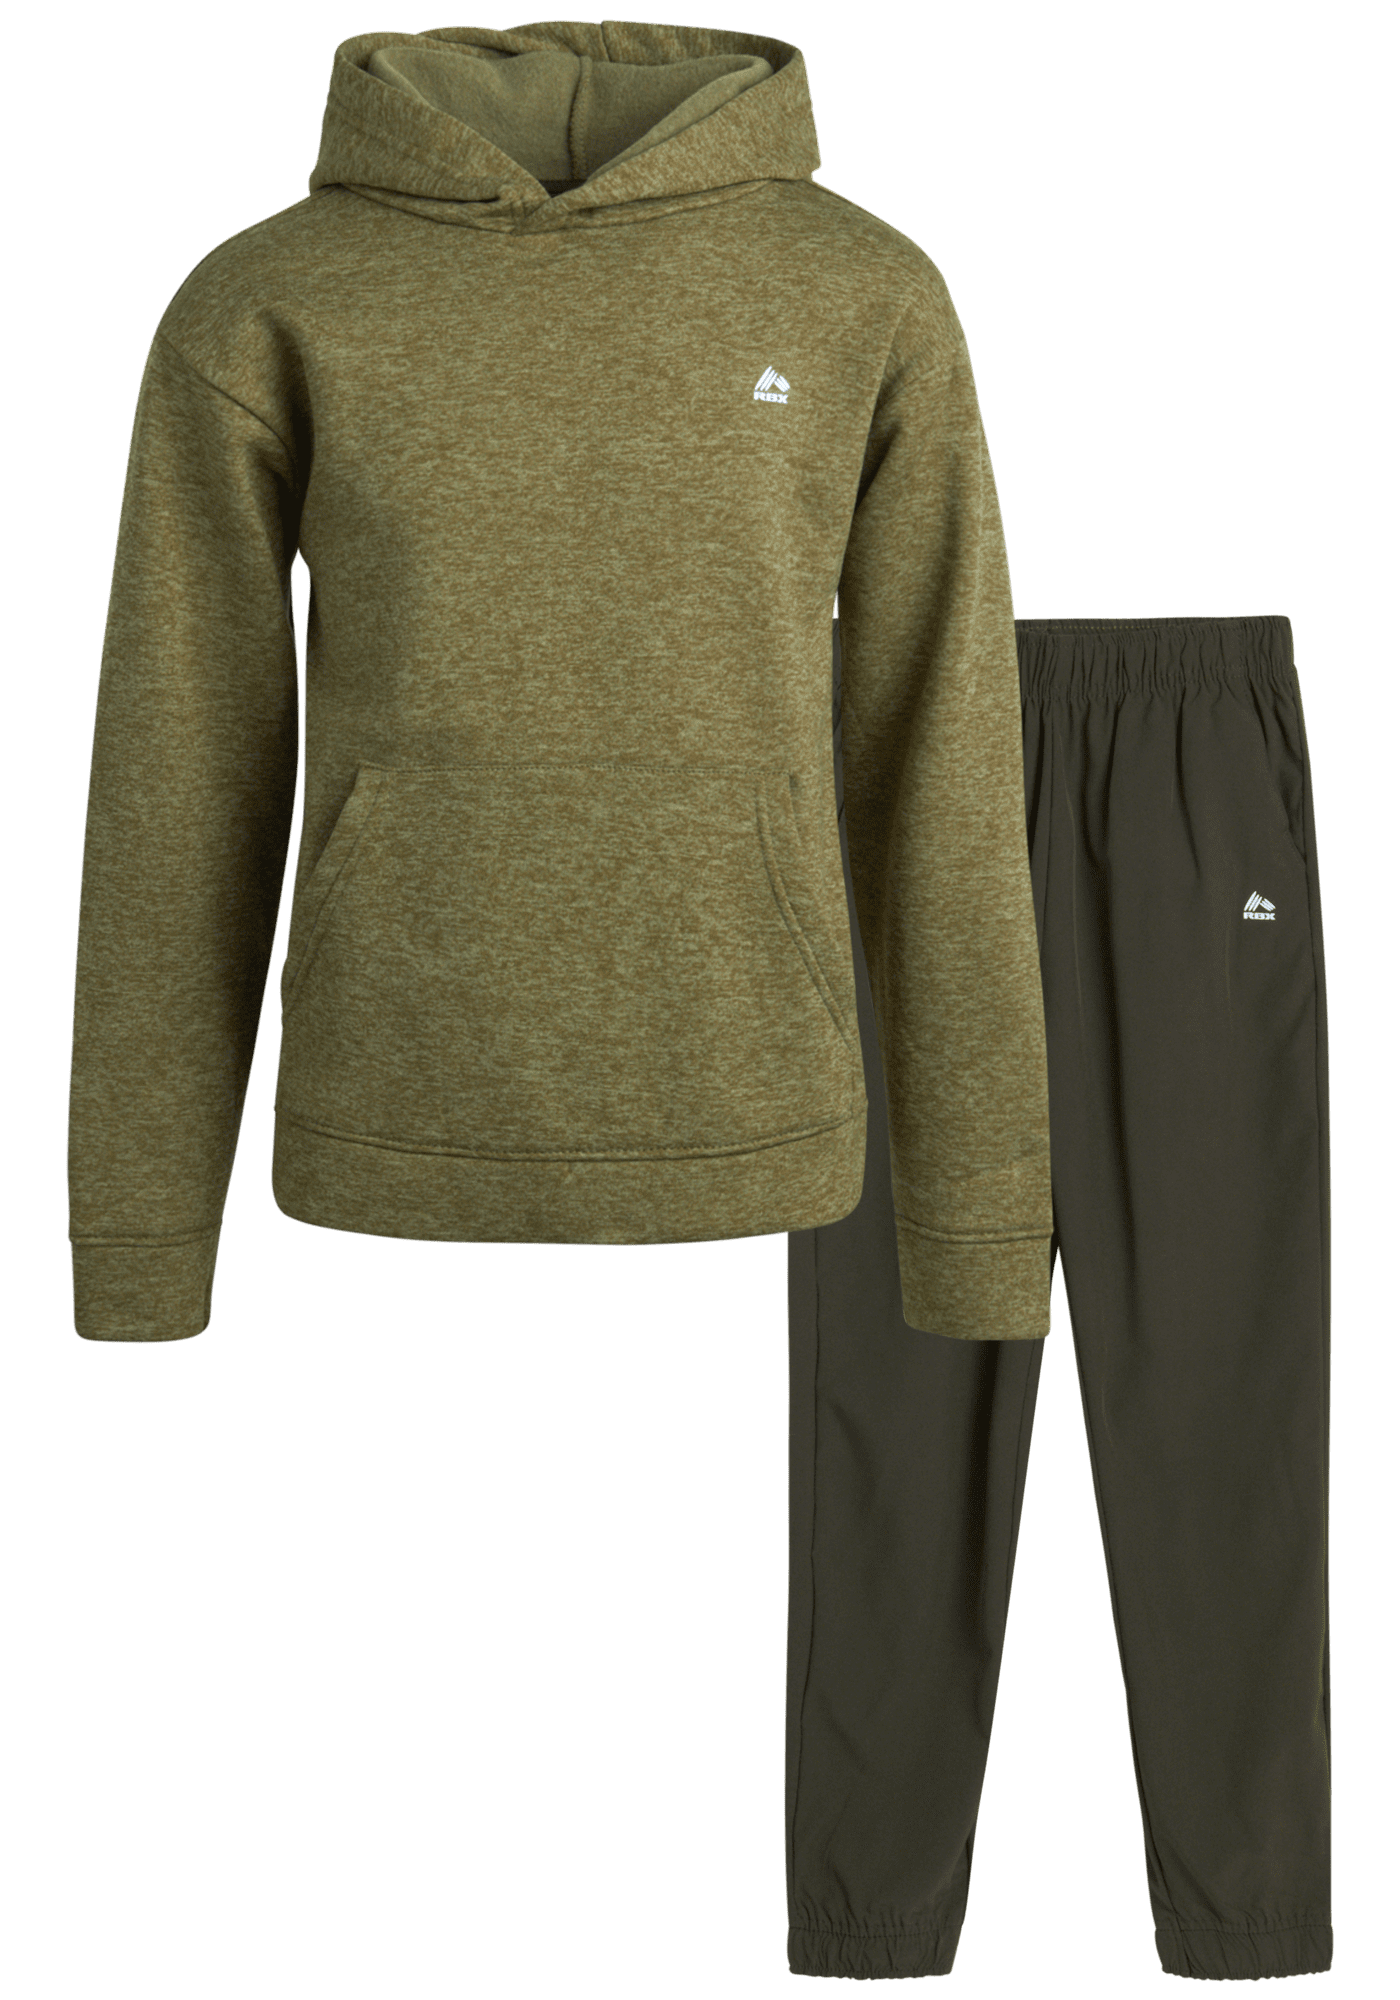 RBX Boys' Pants Set - 2 Piece Fleece Hoodie Sweatshirt and Hybrid Tech ...